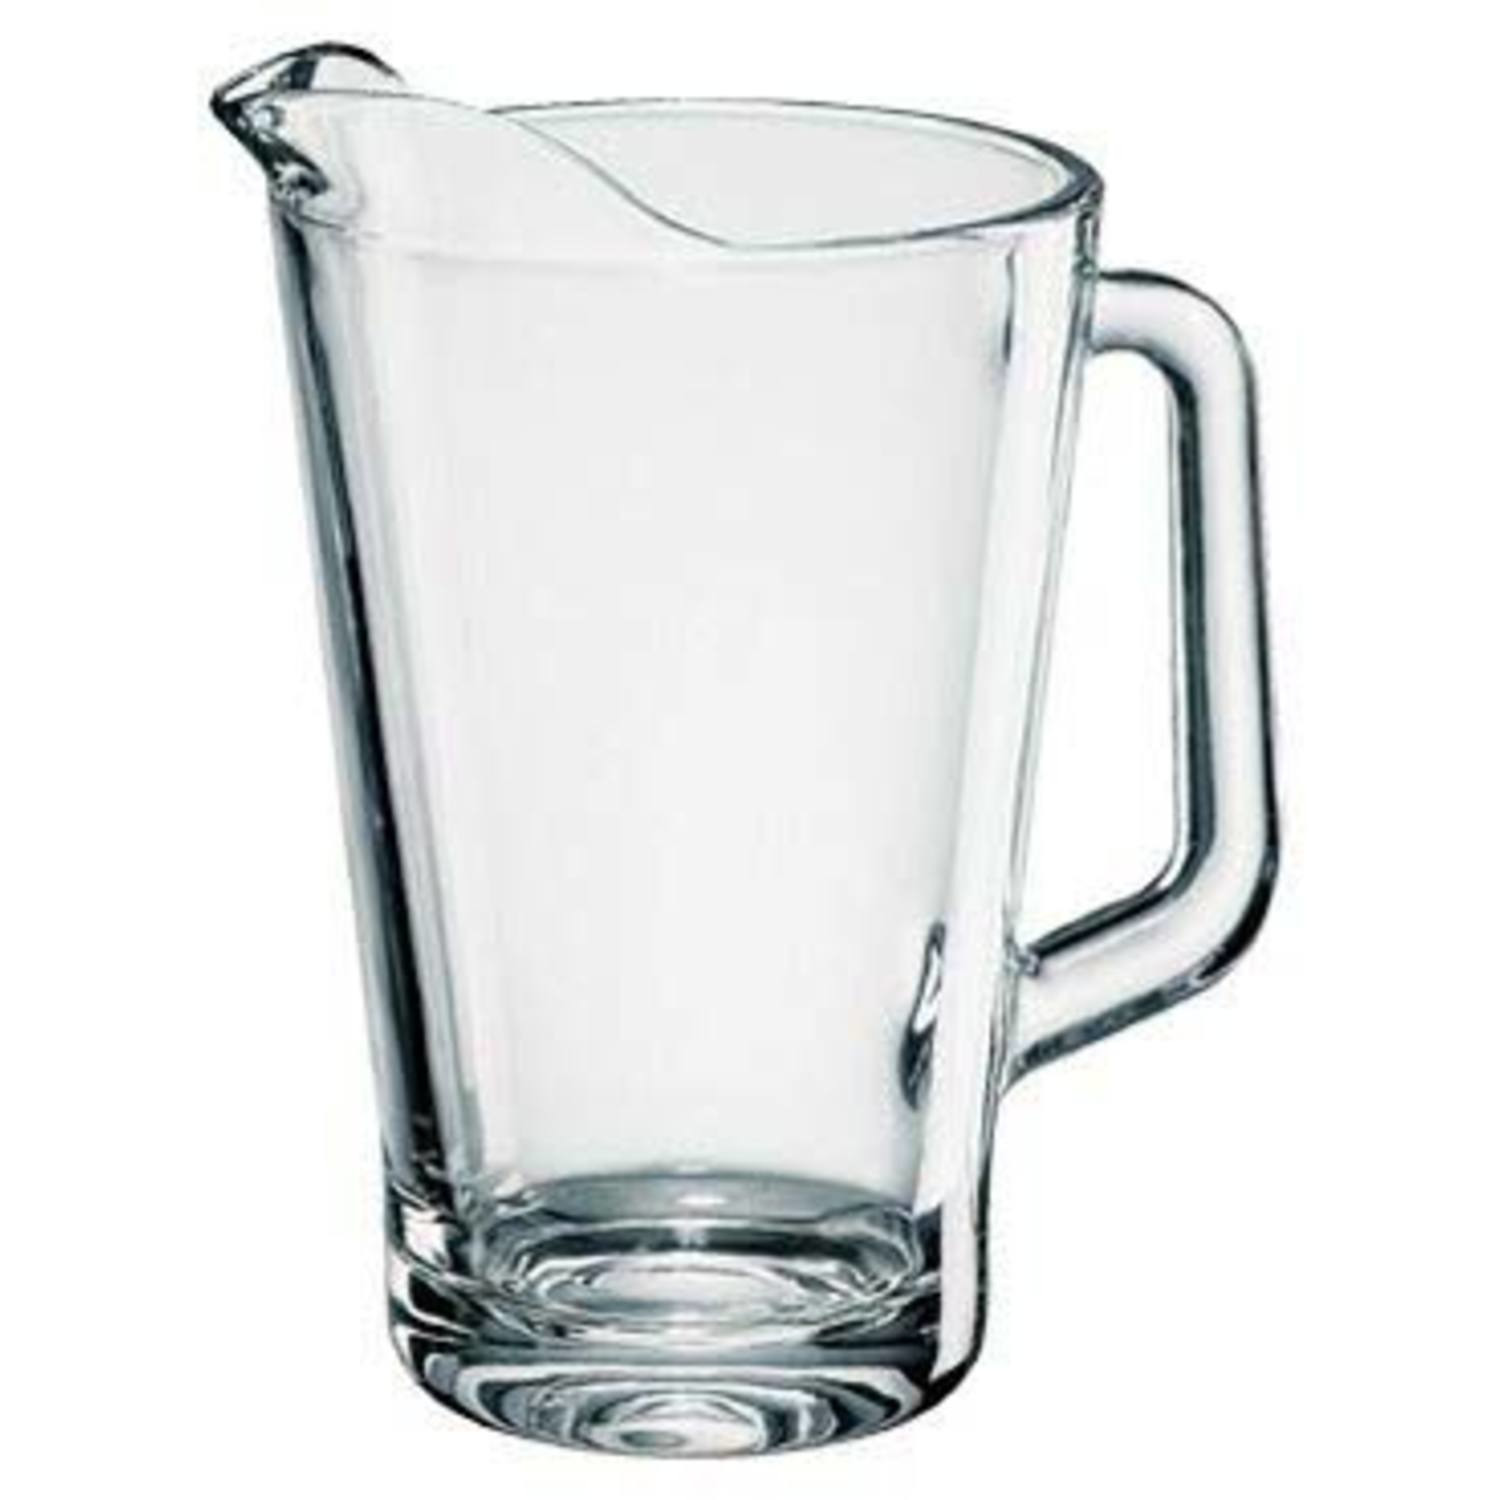 1x Glazen water karaffen-pitchers van 1,8 L Conic